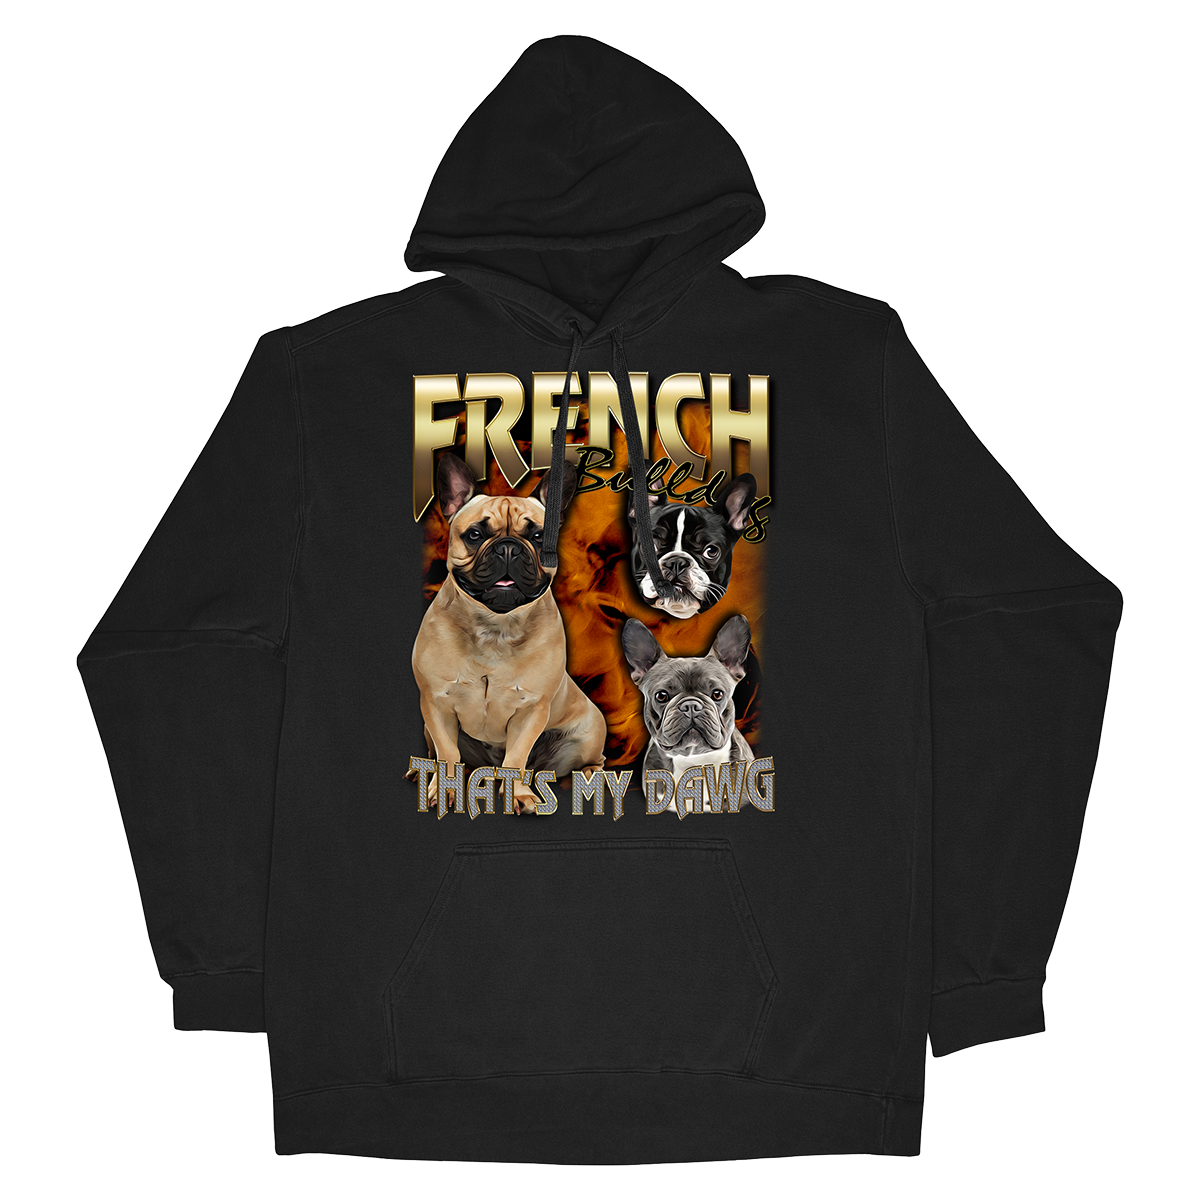 90's Style French Bulldog Hoodies